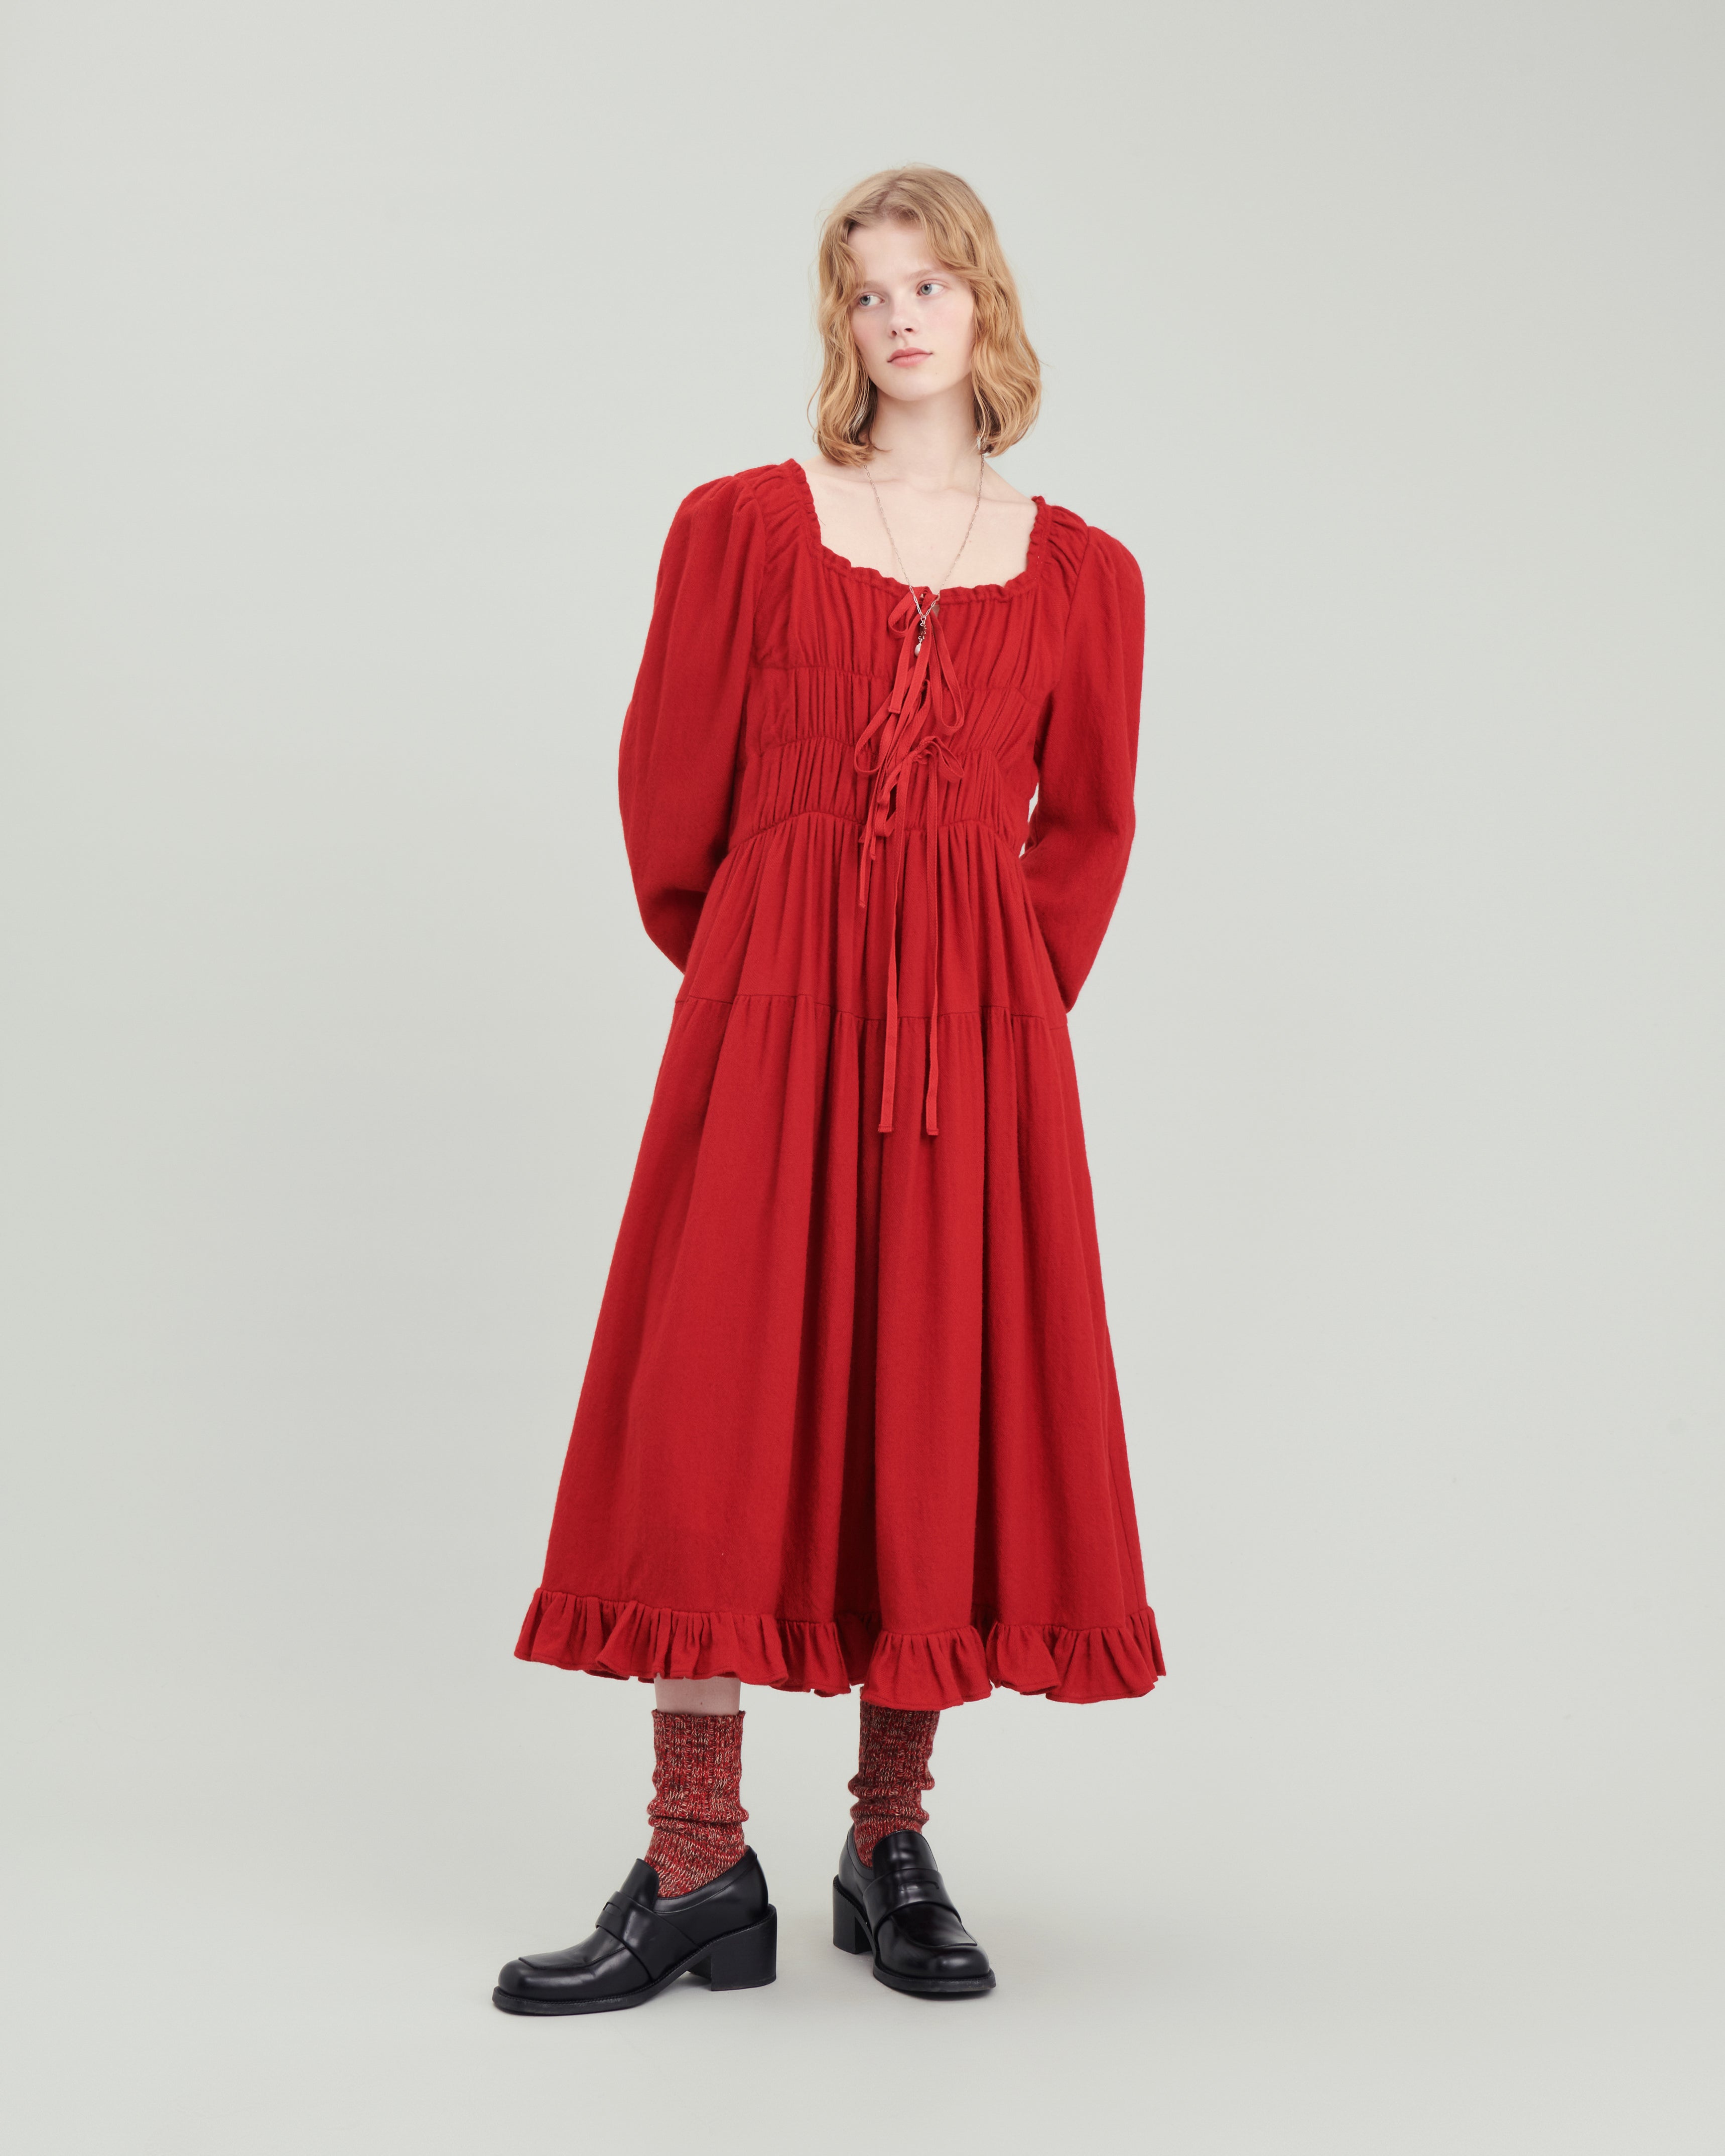 Etta dress in red